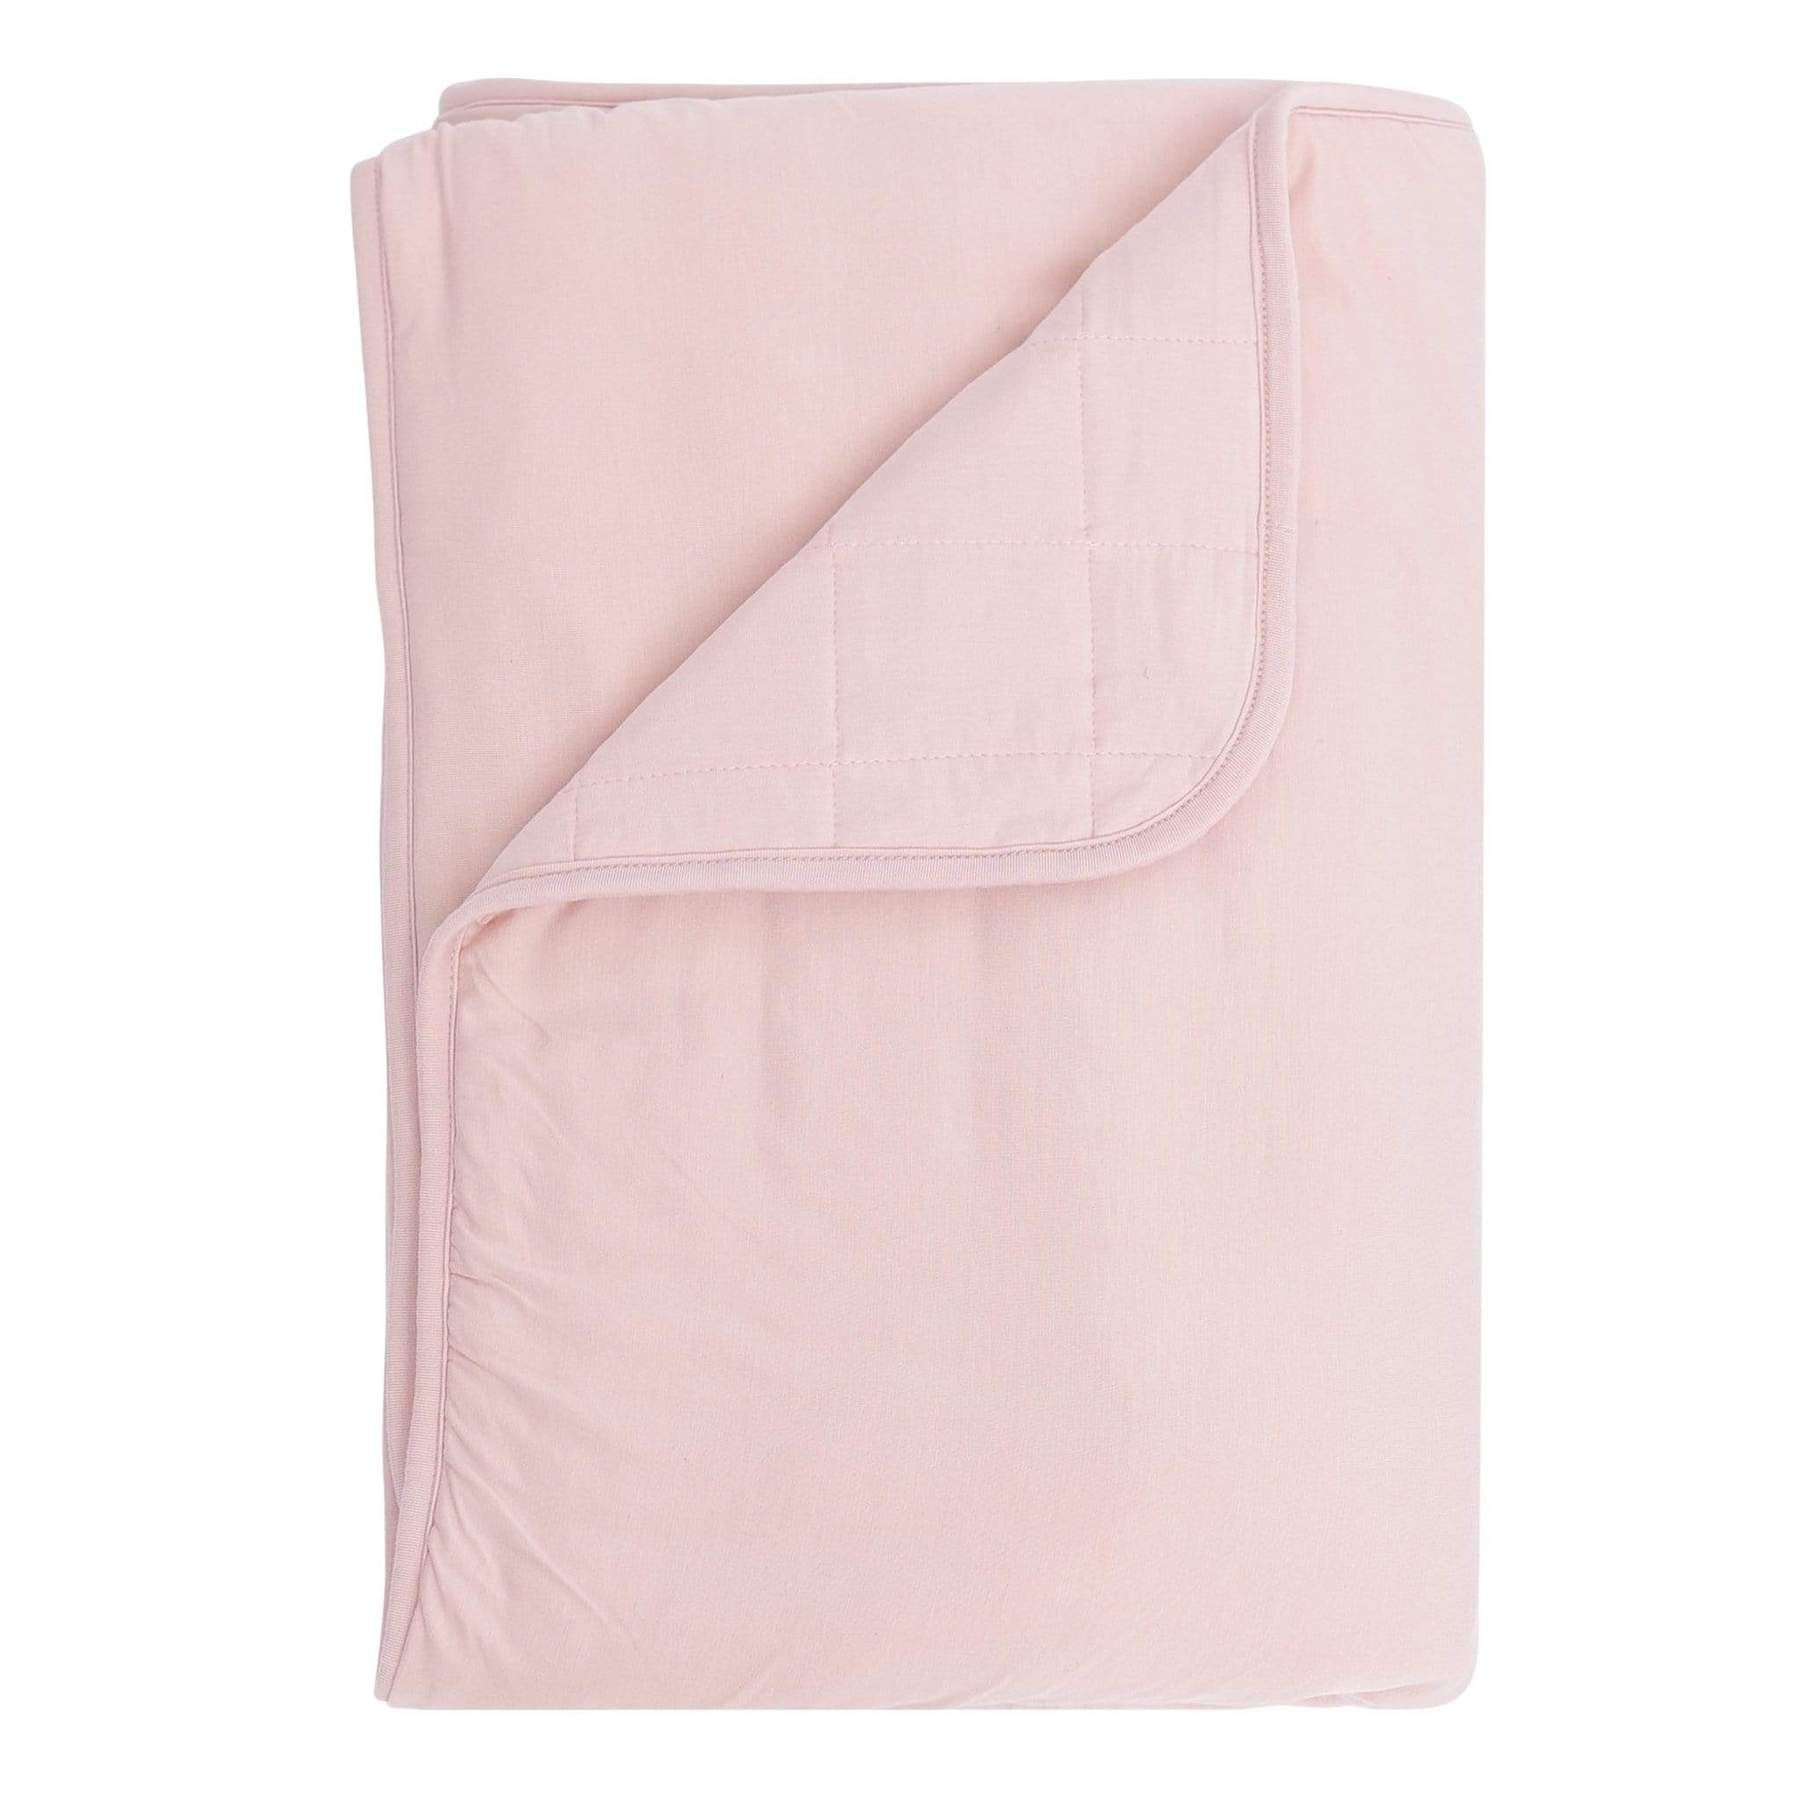 Toddler Blanket in Blush 1.0 | Kyte BABY